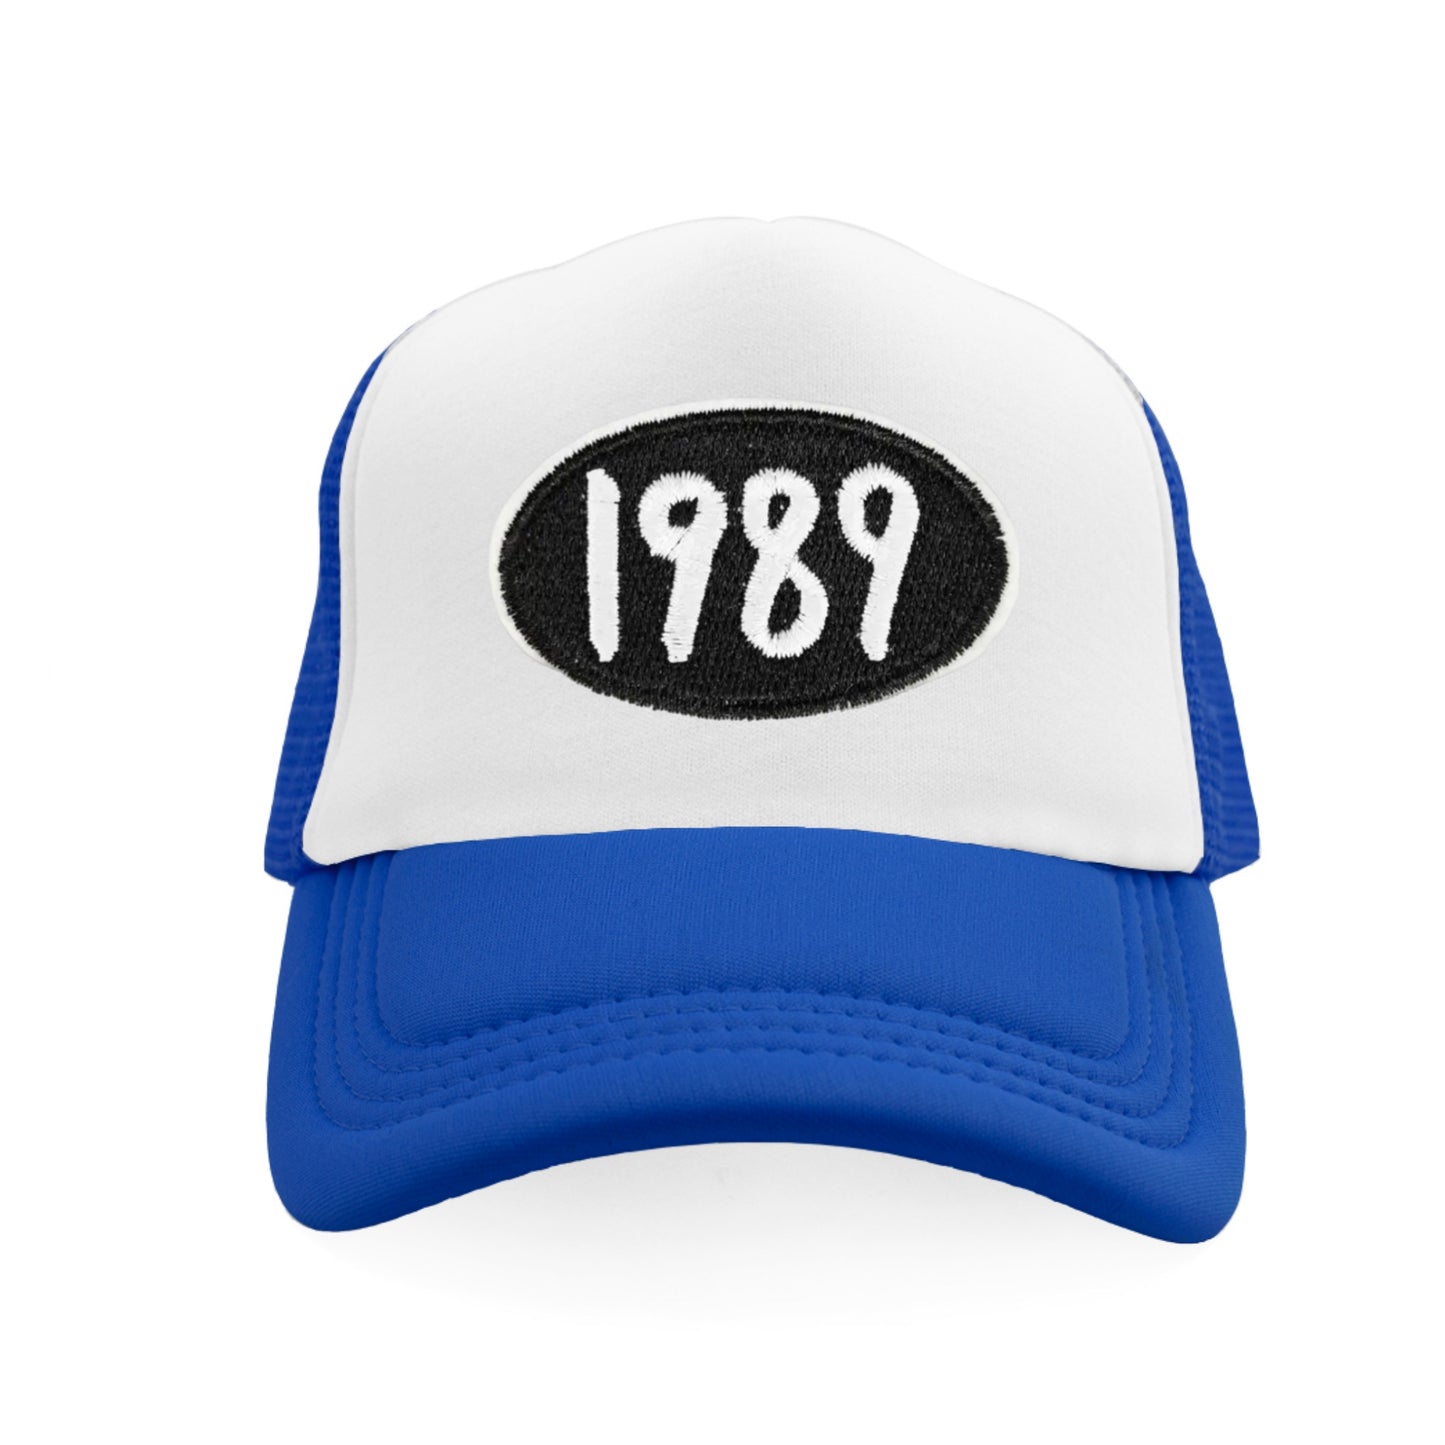 1989 Snapback Hat - Royal Blue / White